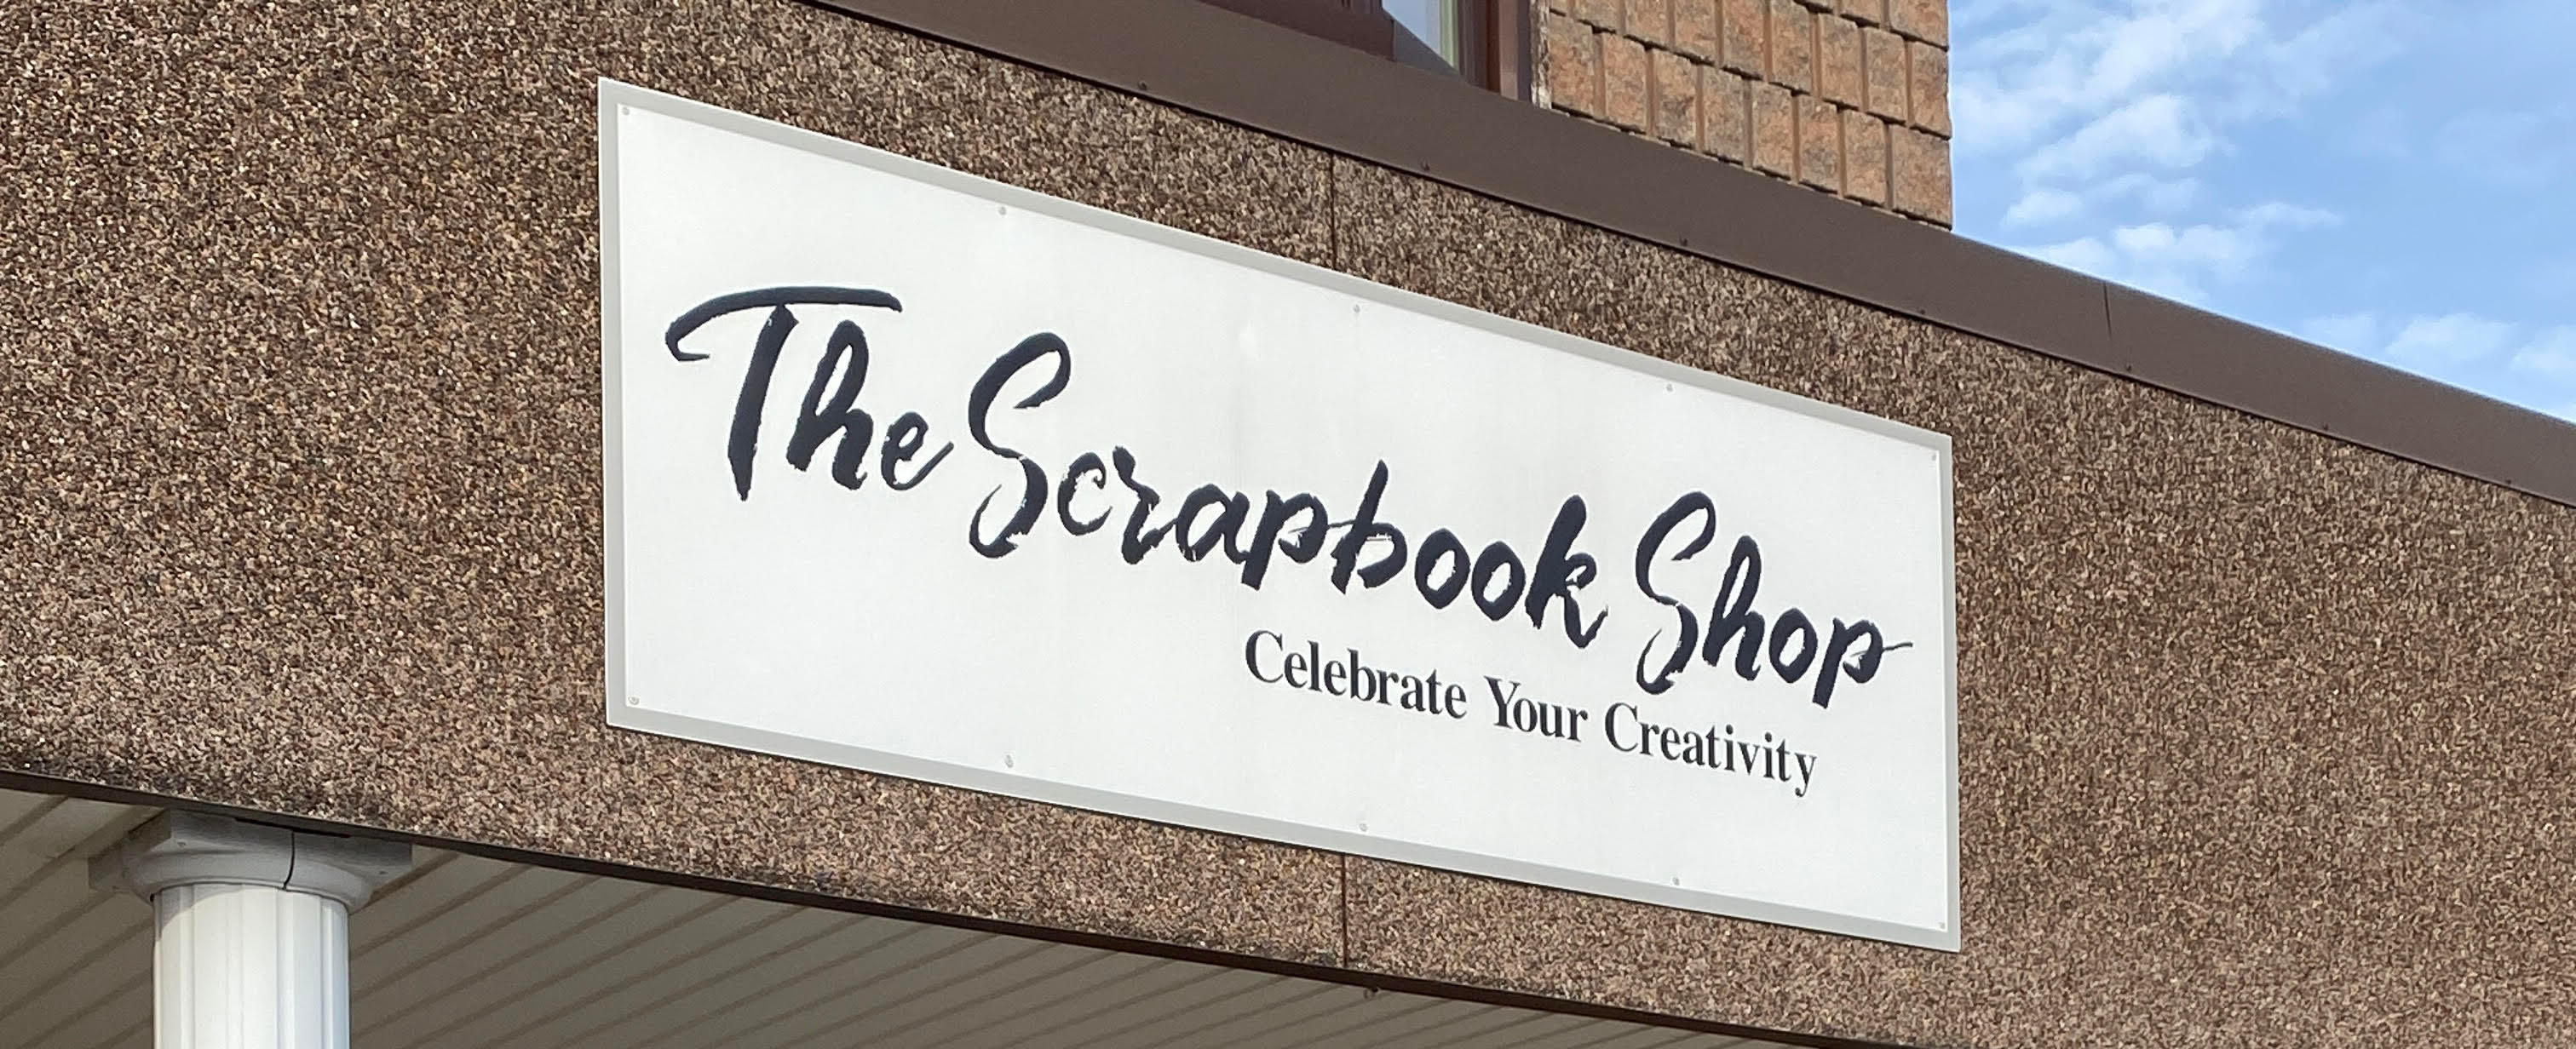 Images The Scrapbook Shop